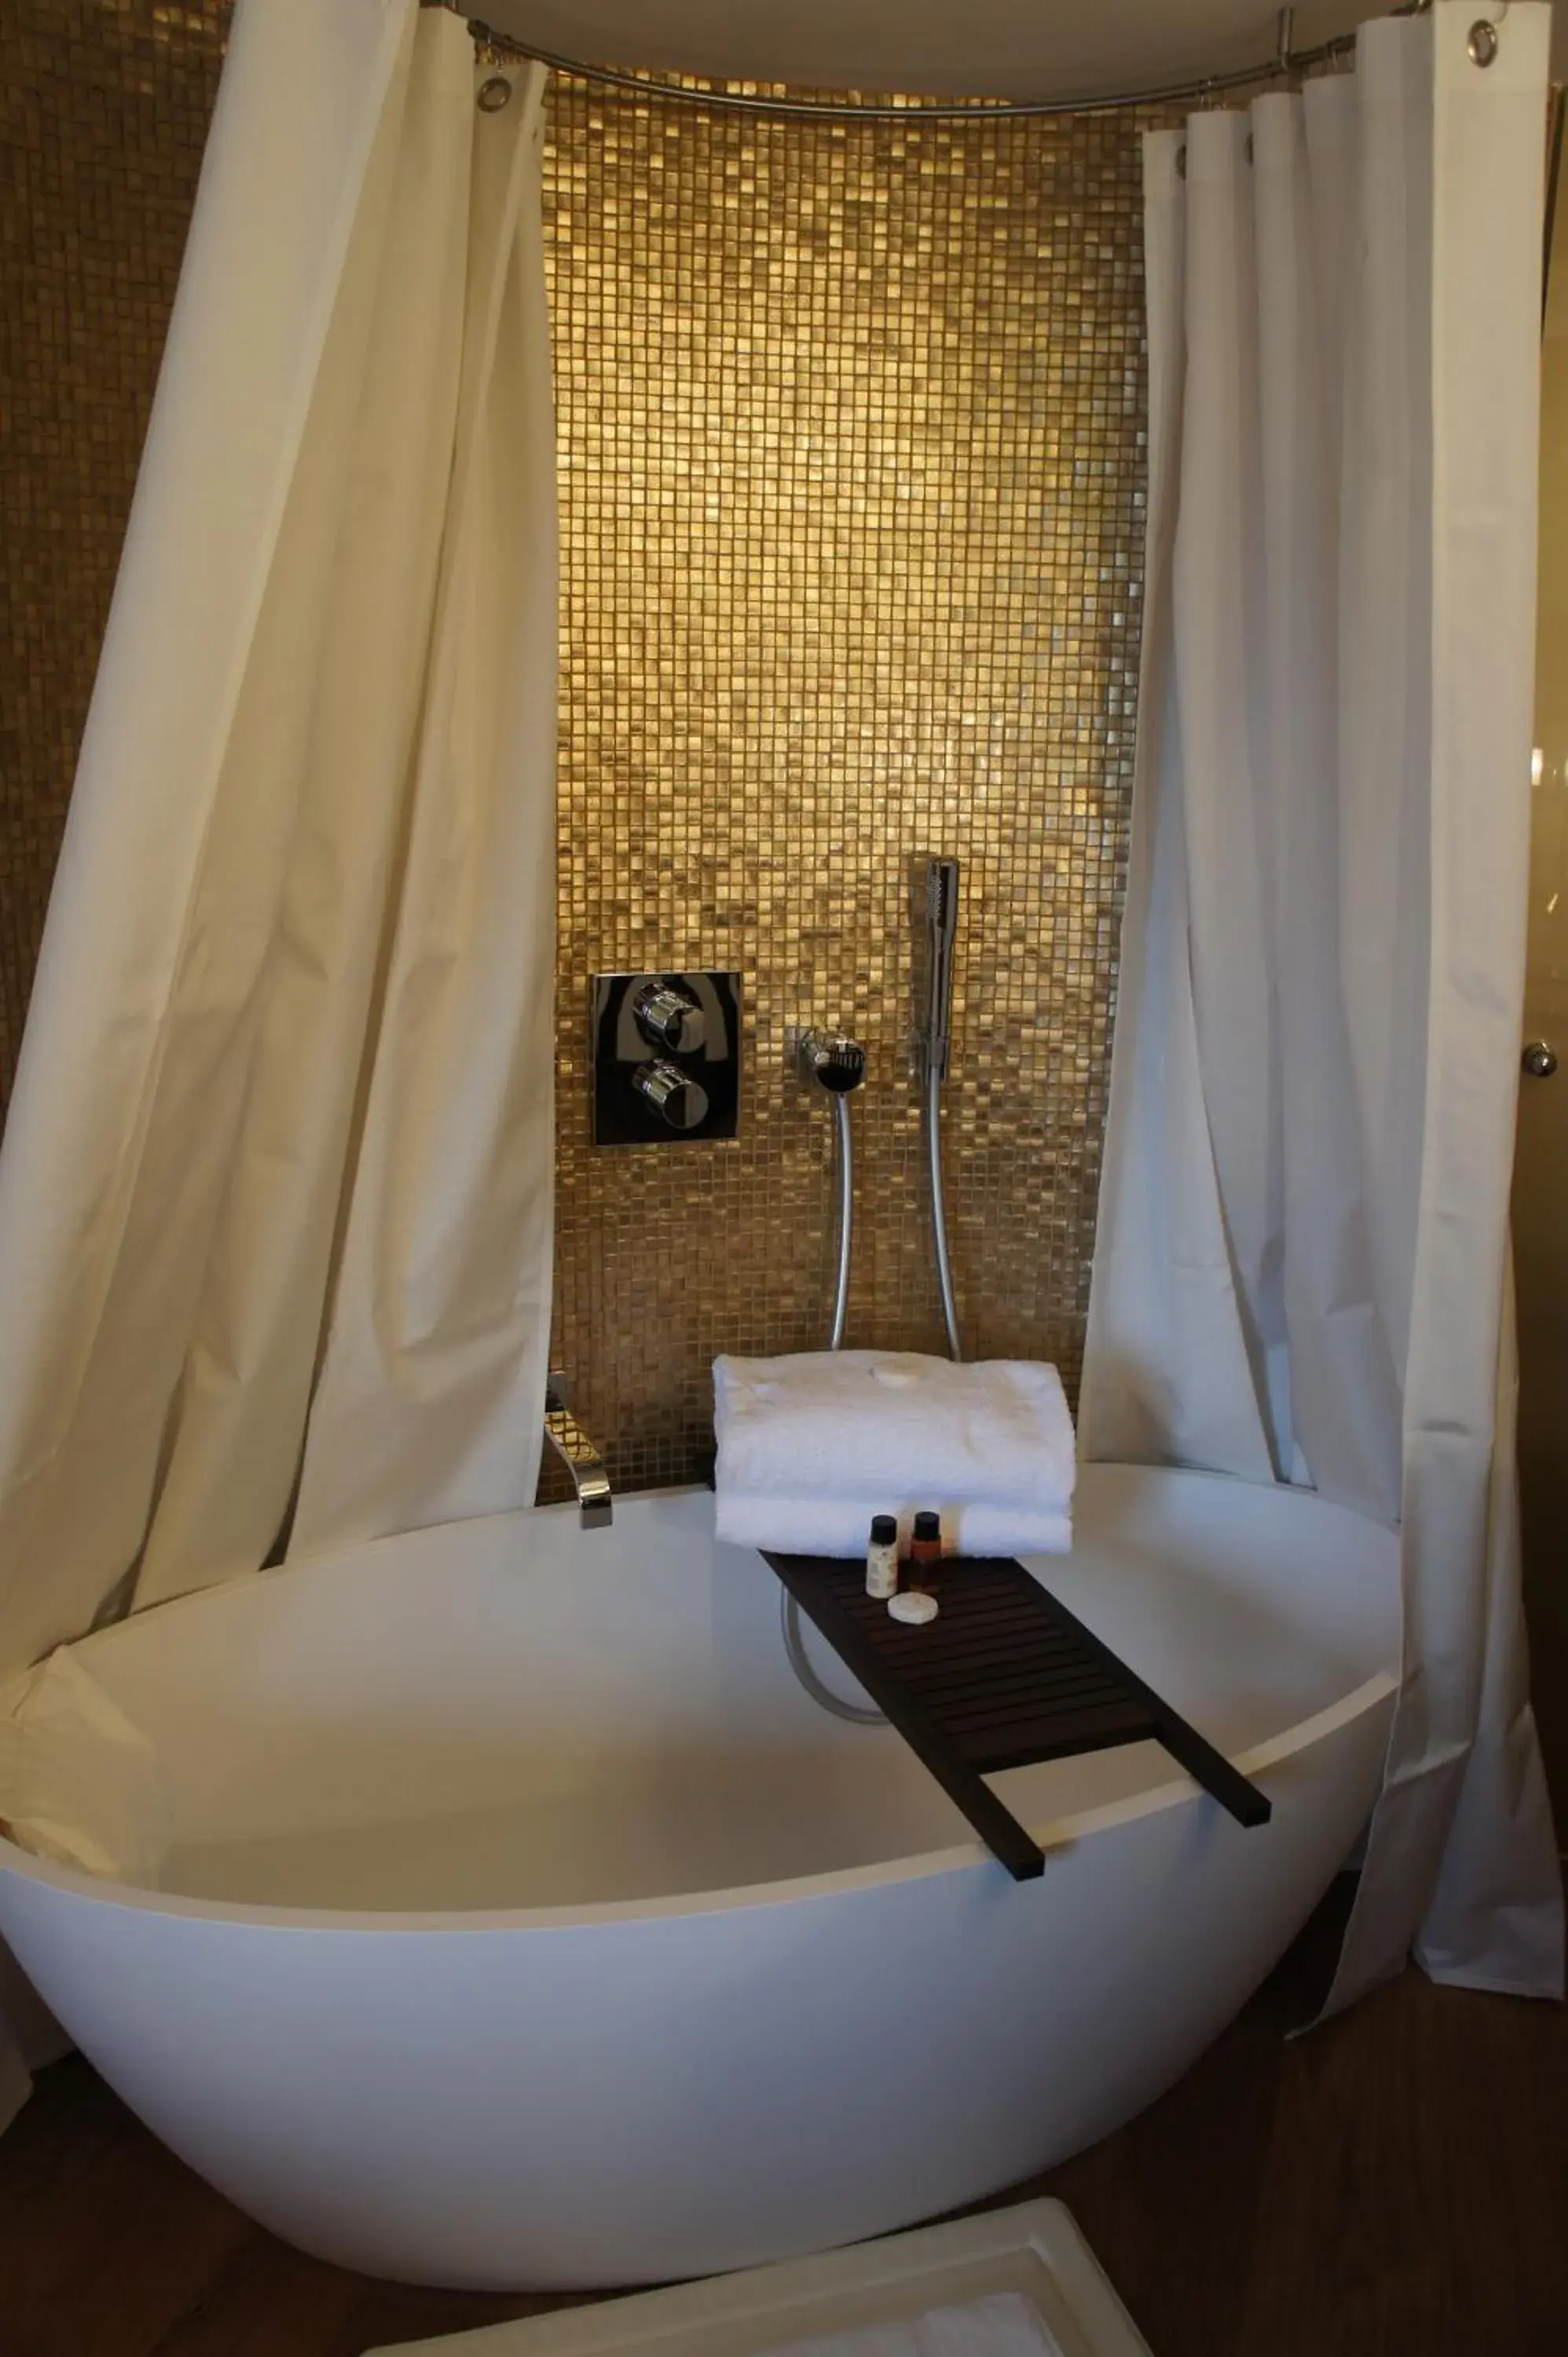 Bathroom in Tonic Hotel Saint Germain des Pr